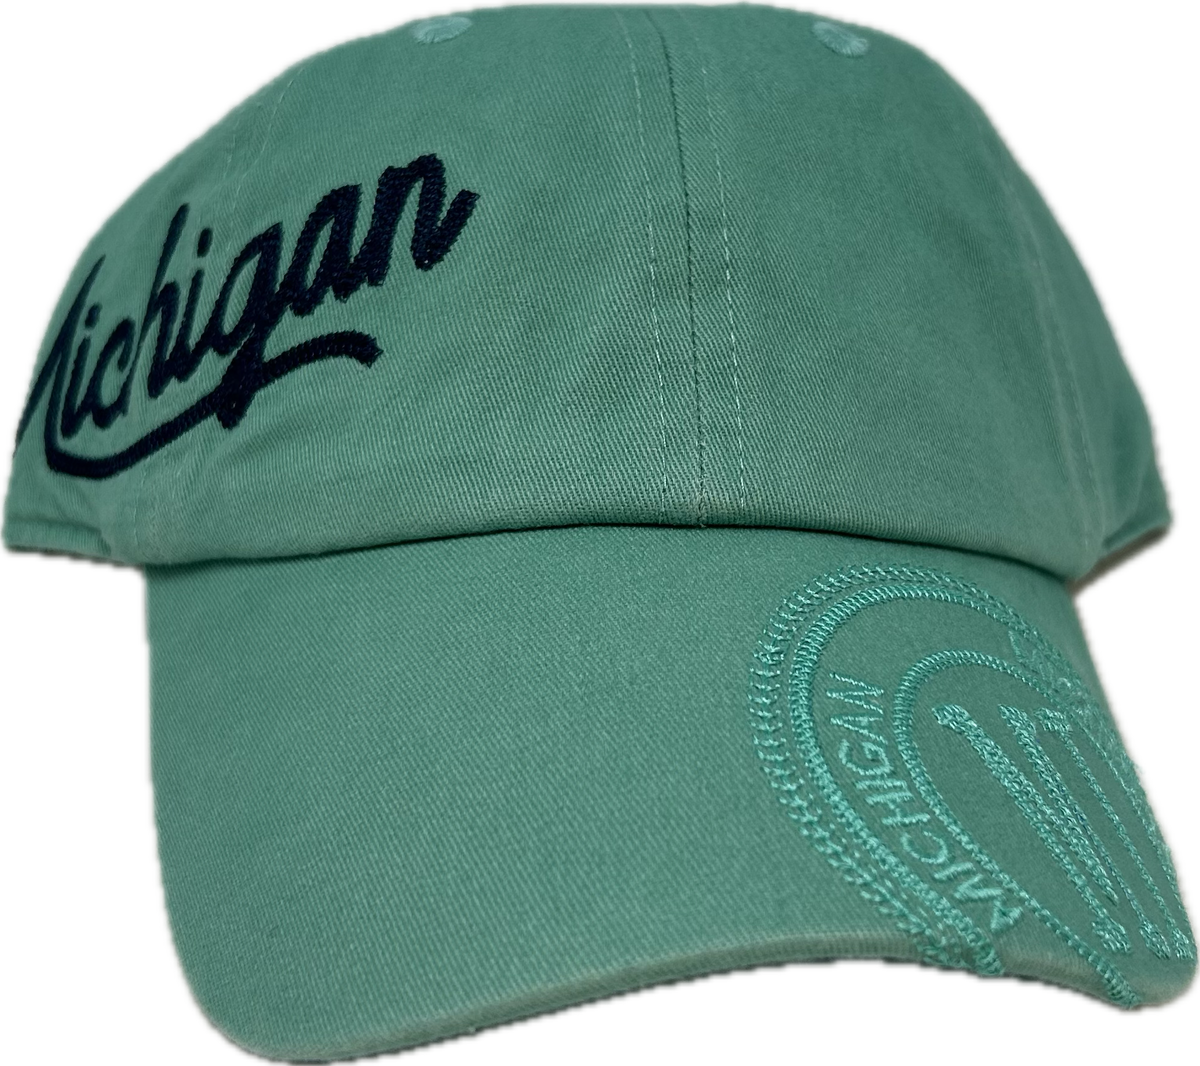 Michigan Ball Cap